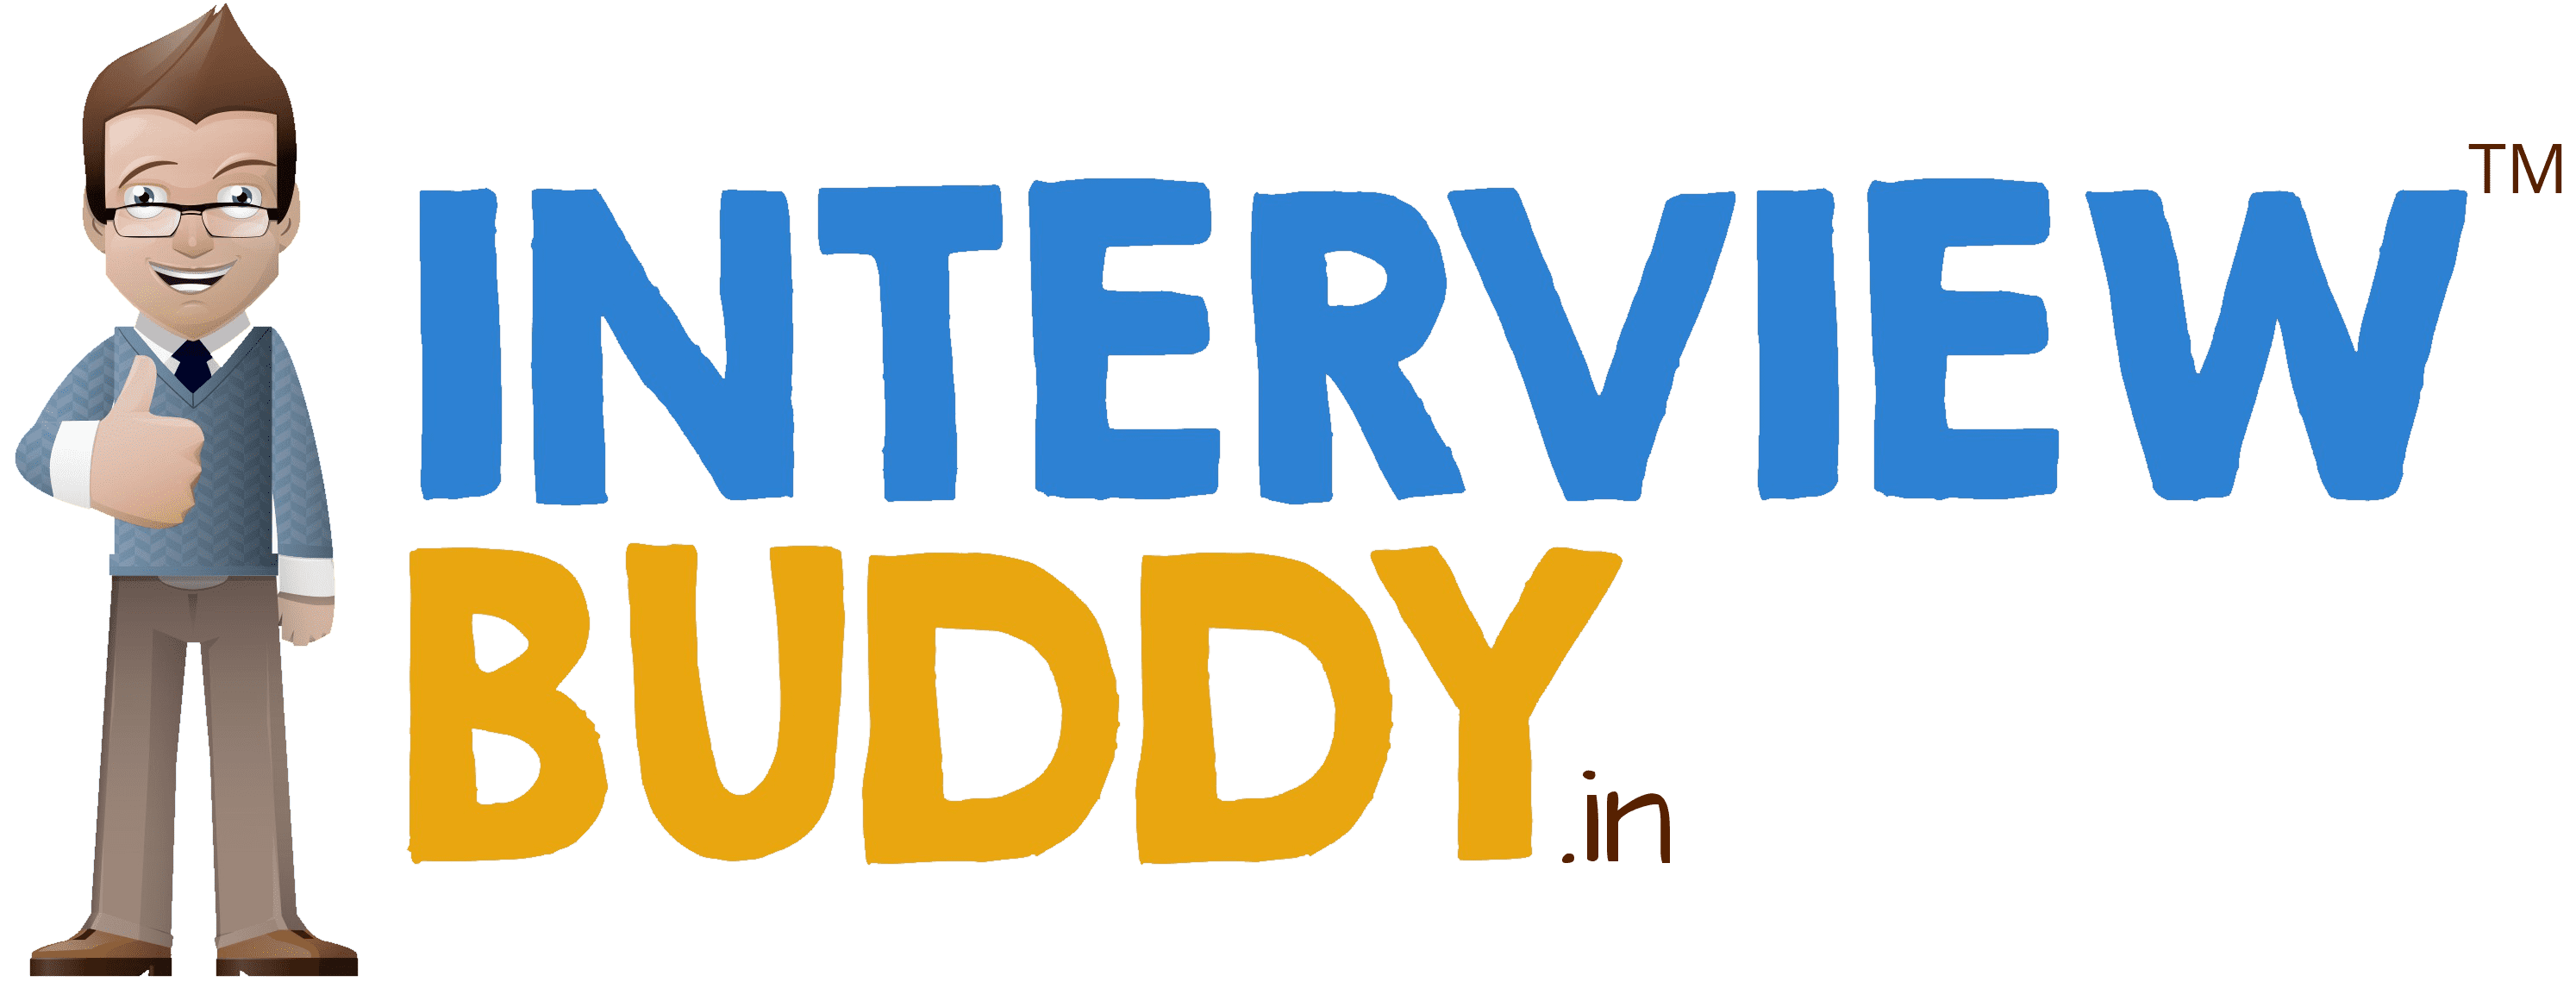 InterviewBuddy LOGO